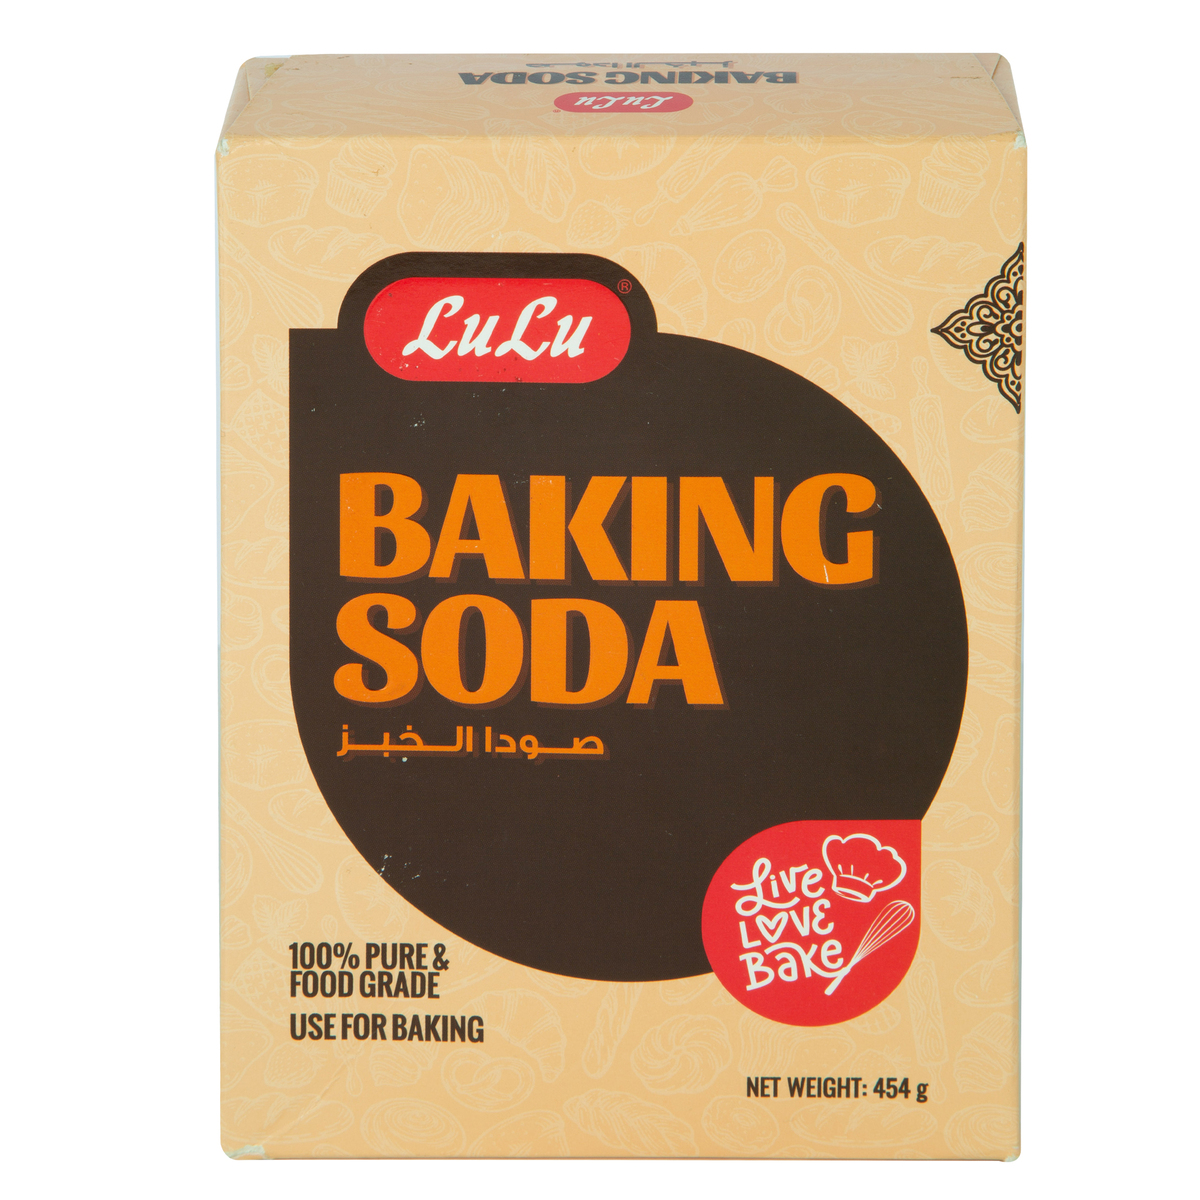 LuLu Baking Soda 454 g